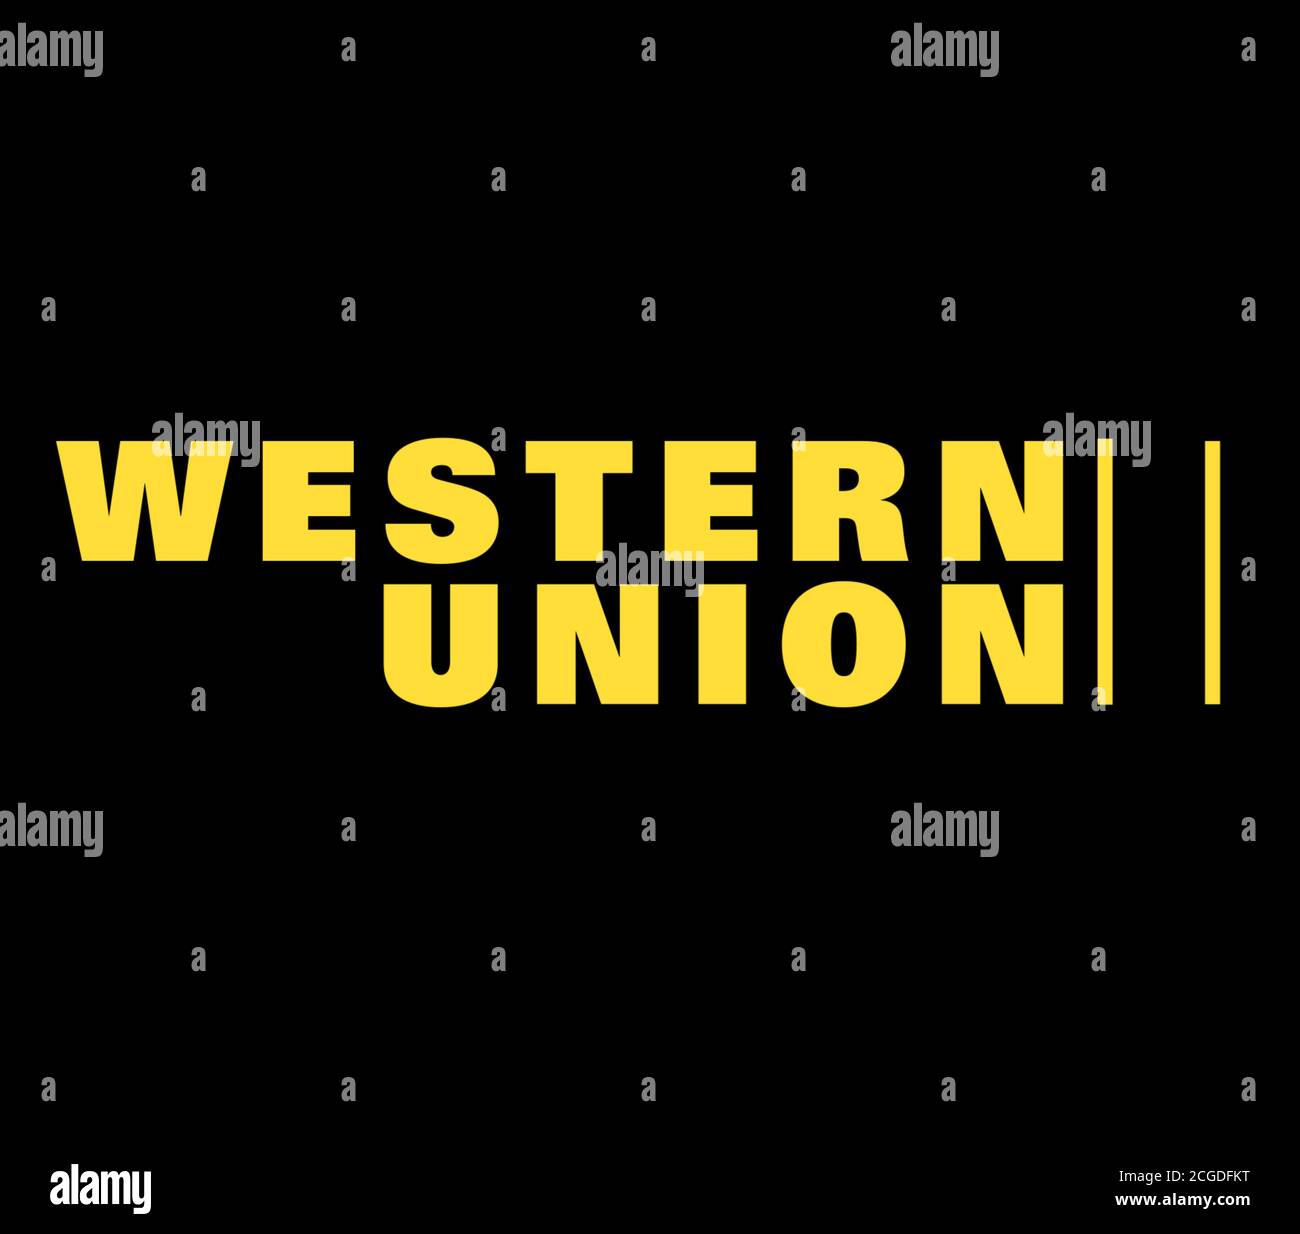 Western Union logo Stock Photo